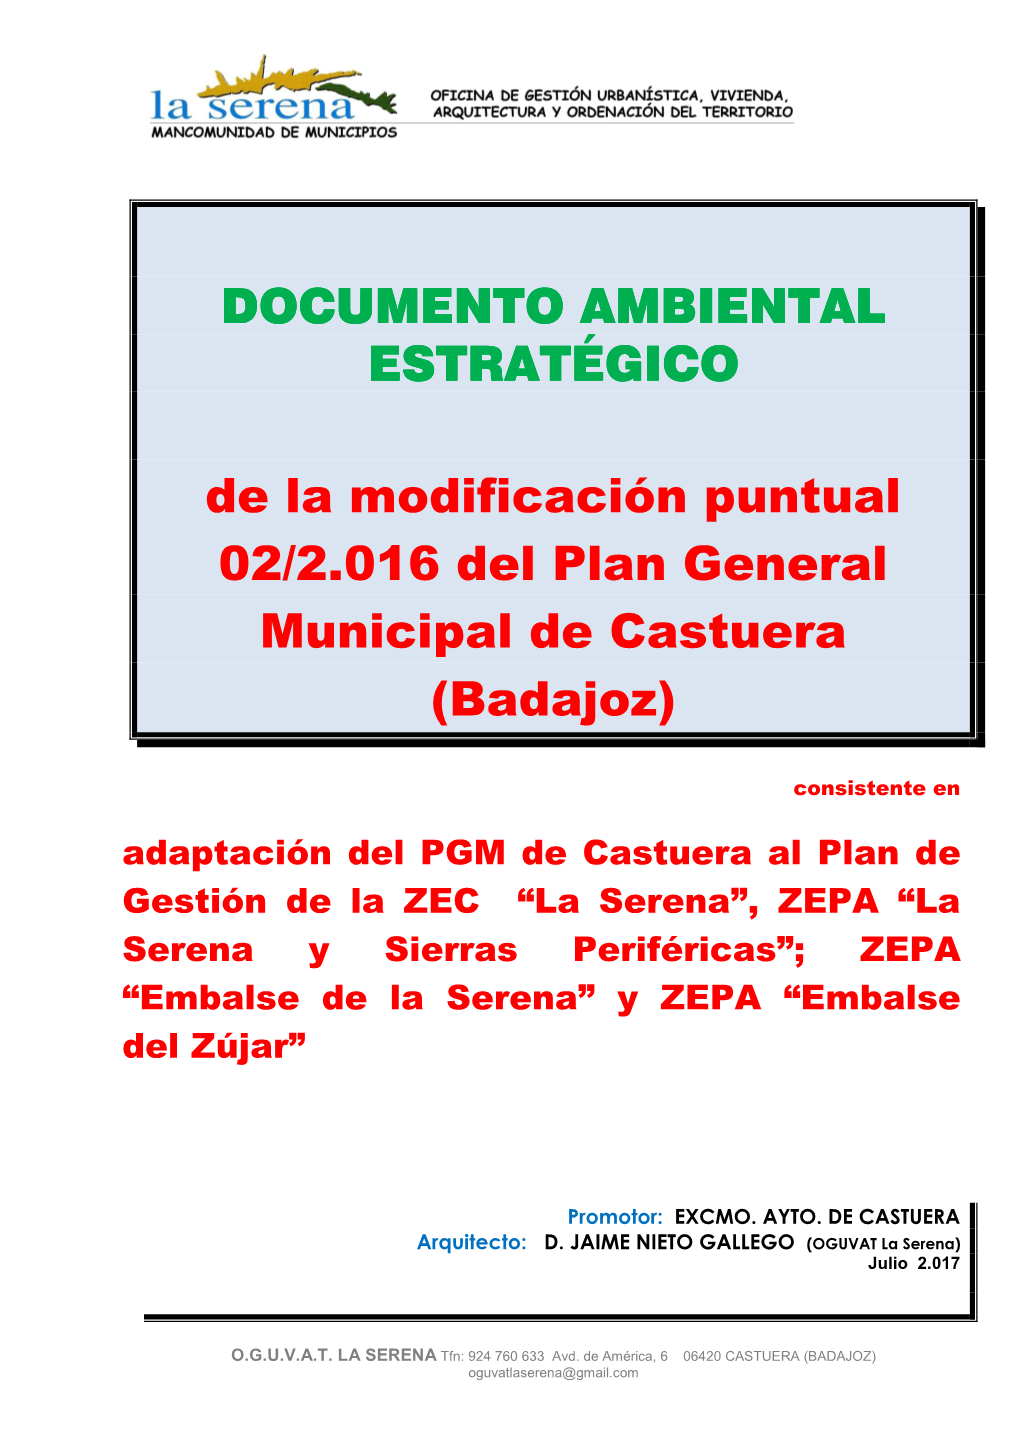 MOD 02 2016 PGM Castuera-DOCUMENTO AMBIENTAL ESTRATEGICO